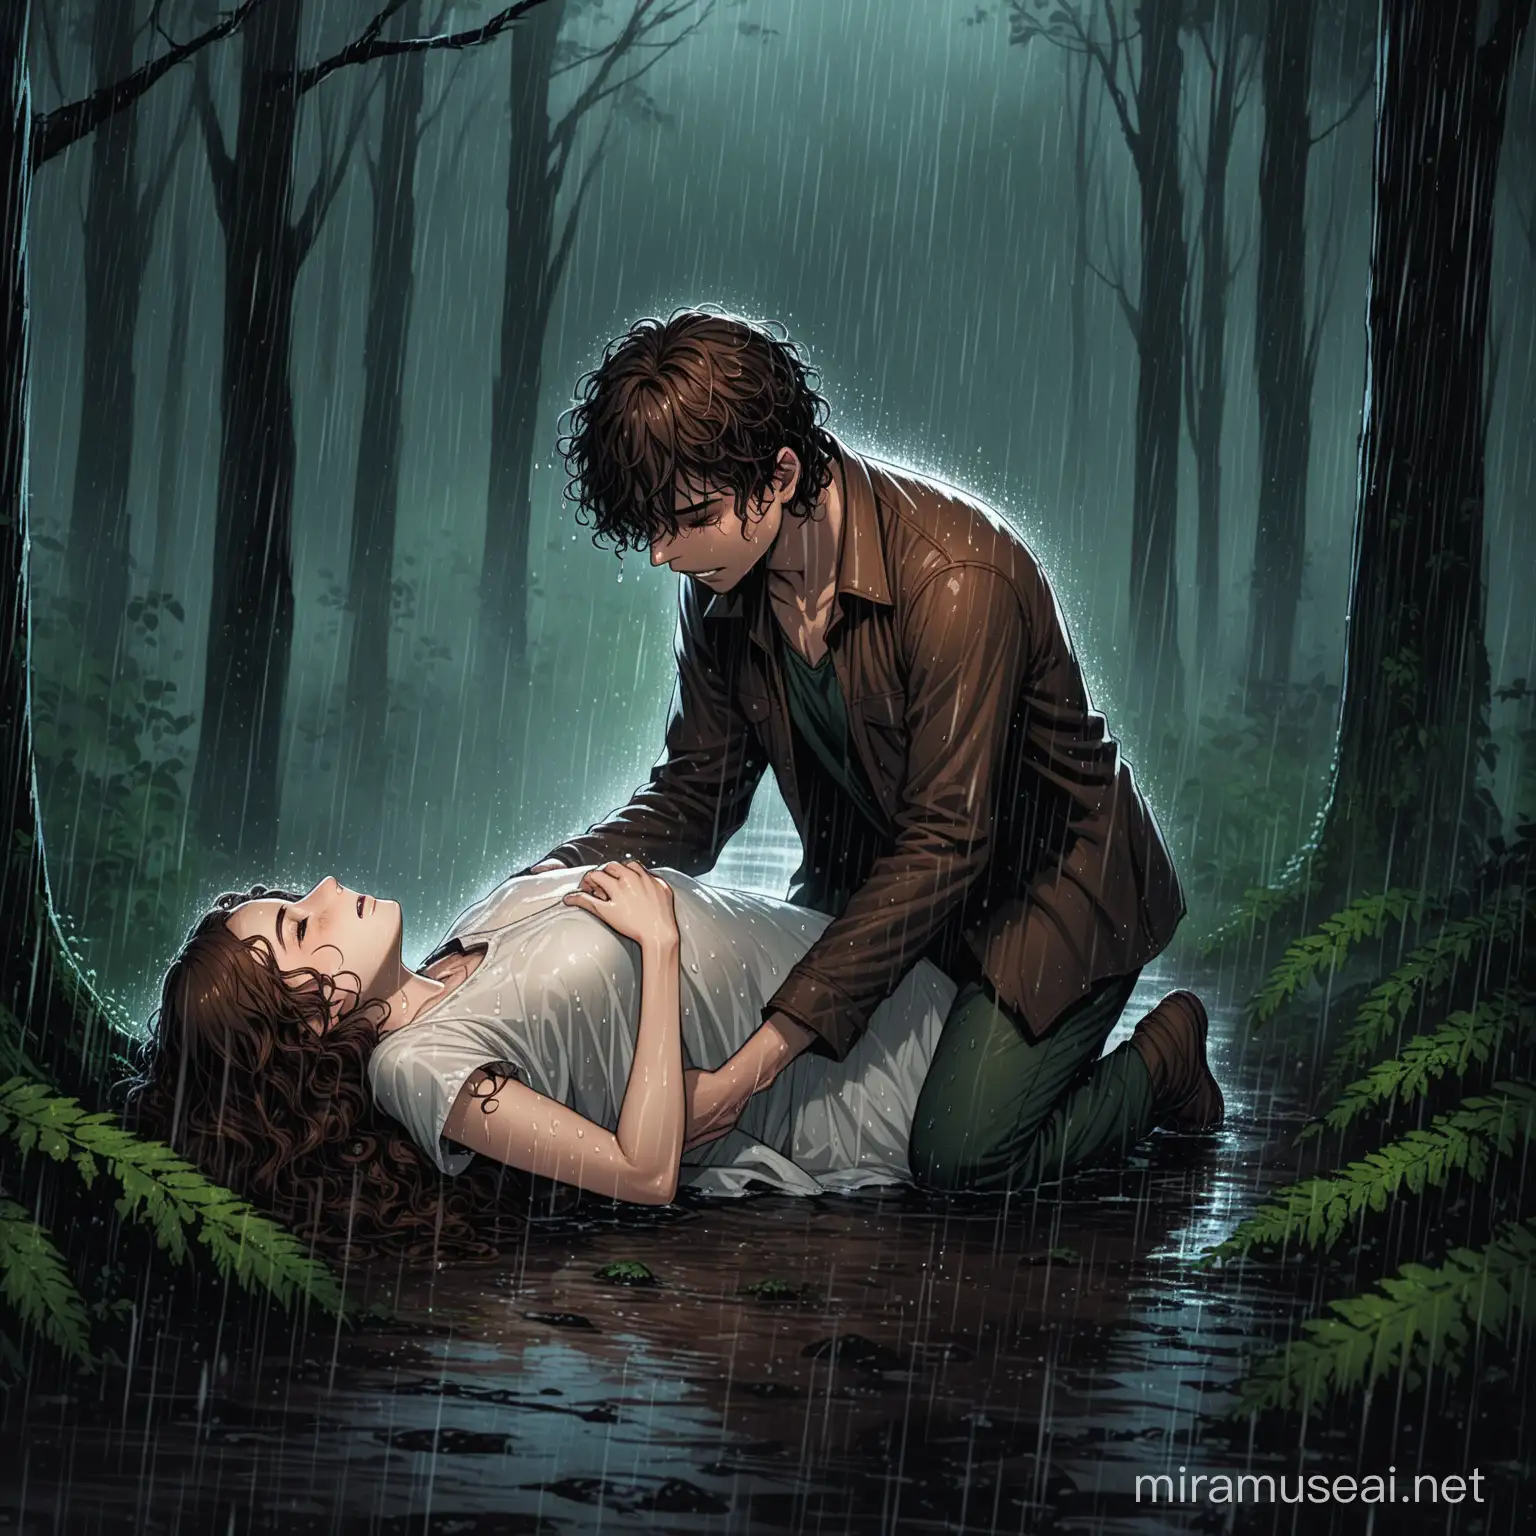 Emotional Scene Mourning Boy Holding Girlfriends Corpse in Dark Forest Rain